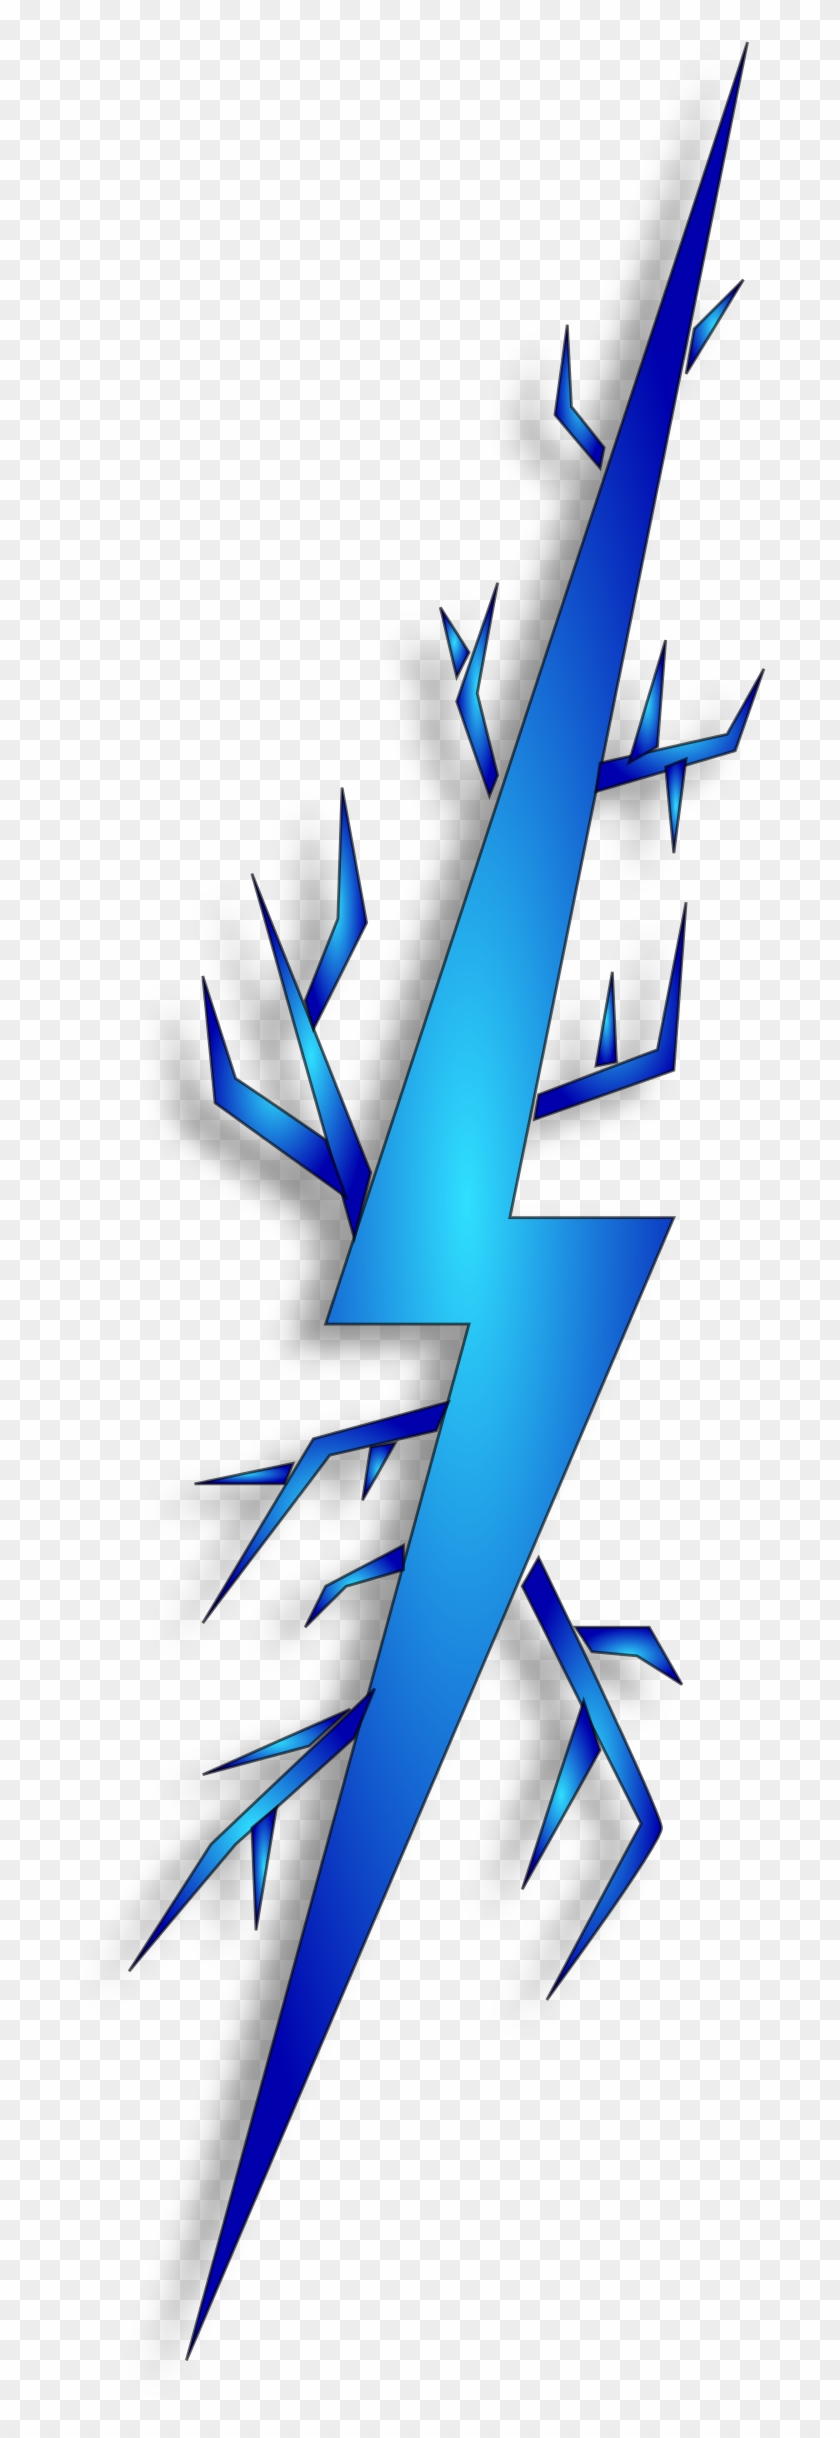 Electricity Clipart Lightning - Lightning Bolt Clipart - Png Download #227895